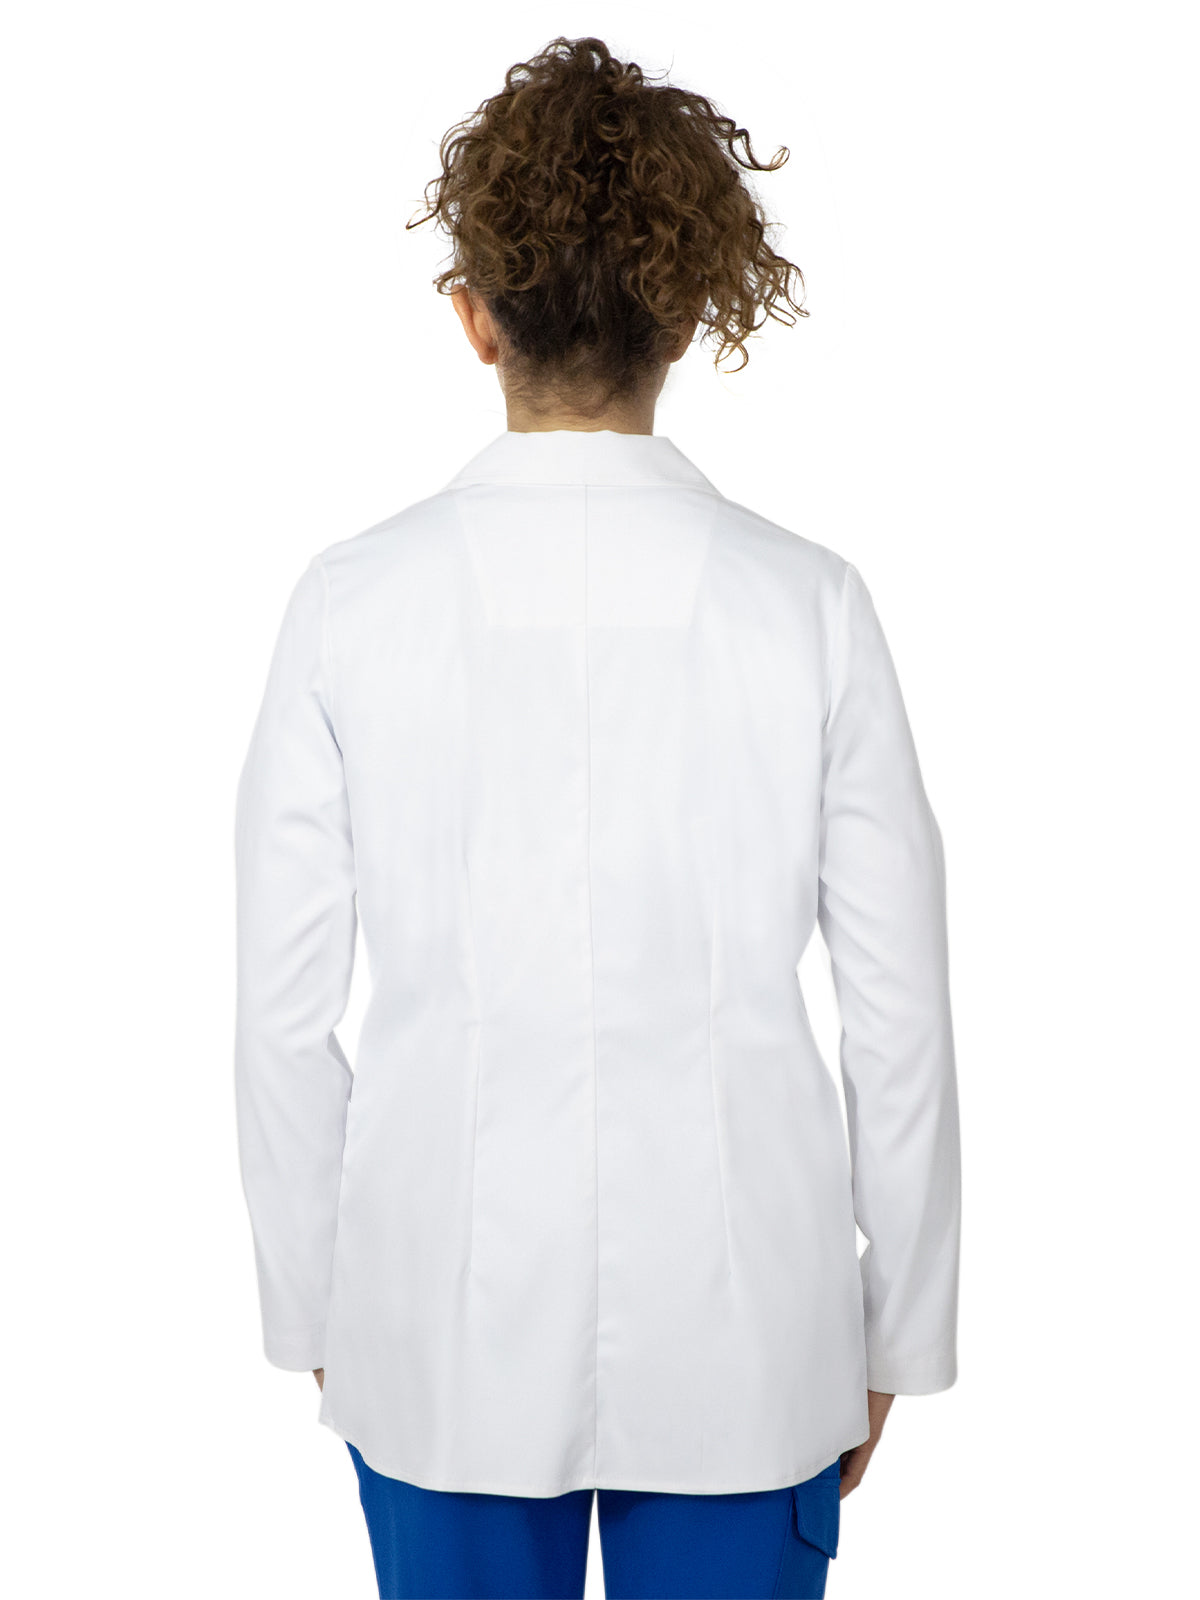 Women's Five-Pocket 29" Flo Consultation Lab Coat